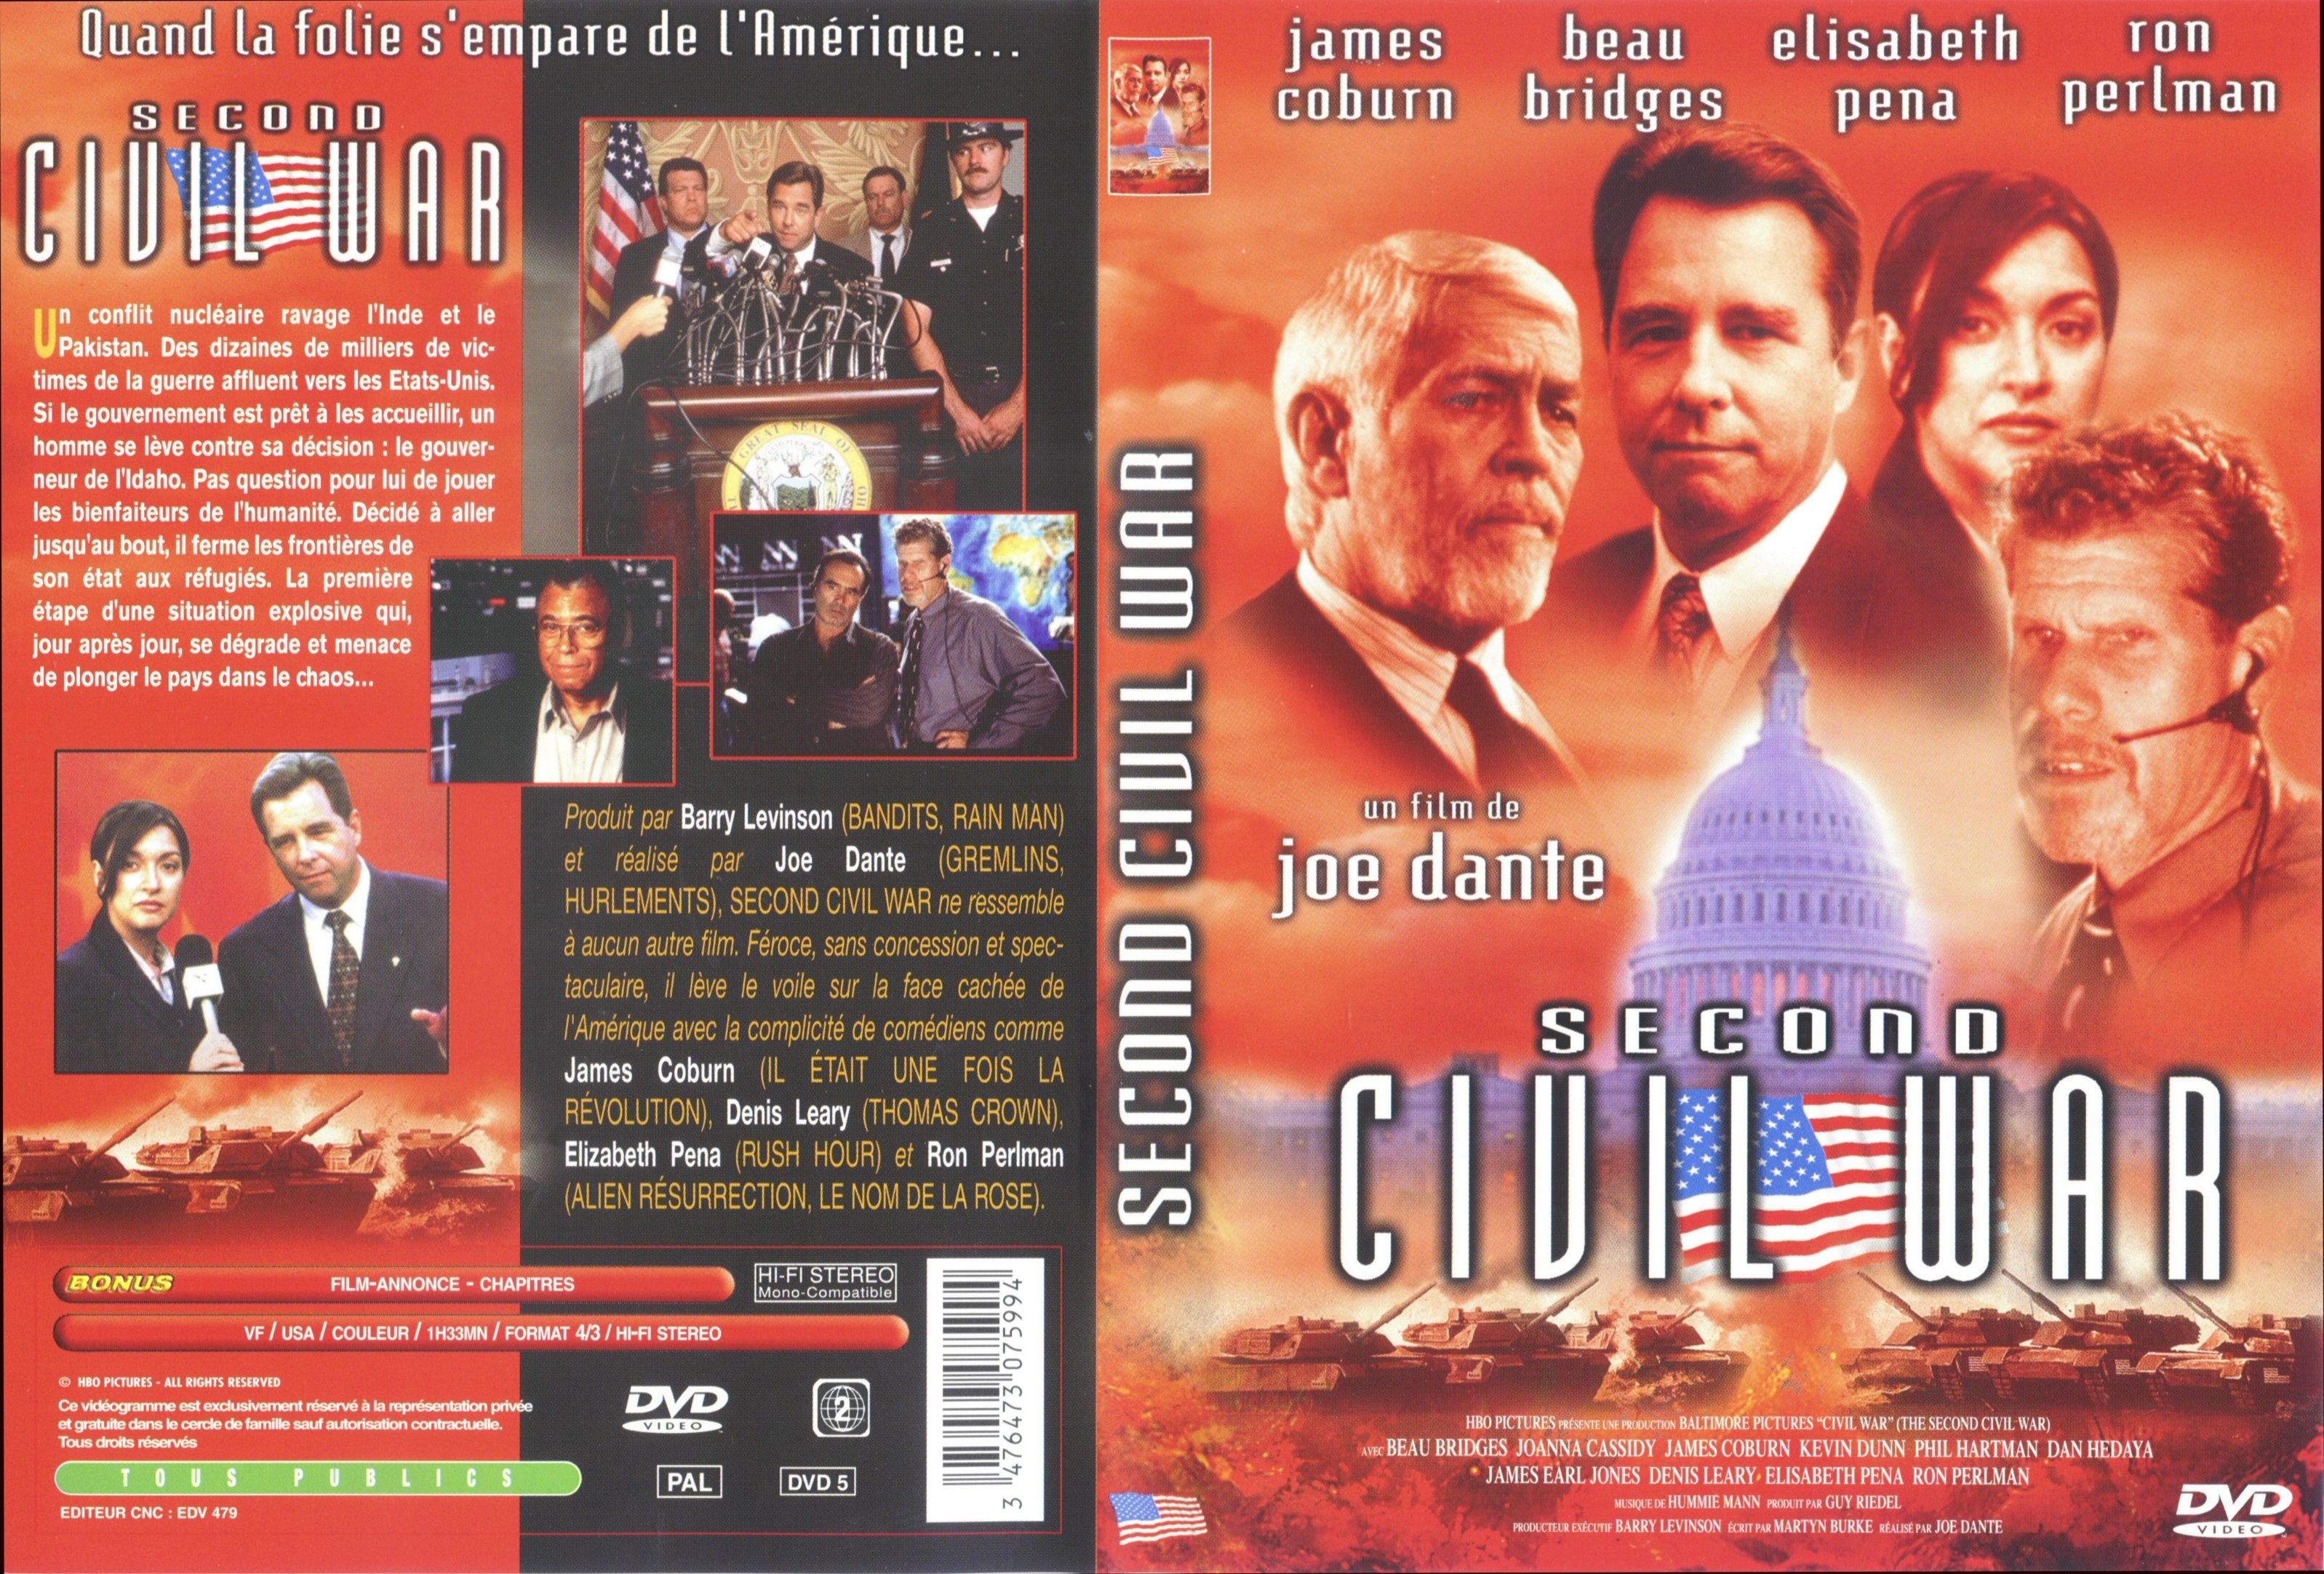 Jaquette DVD Second civil war